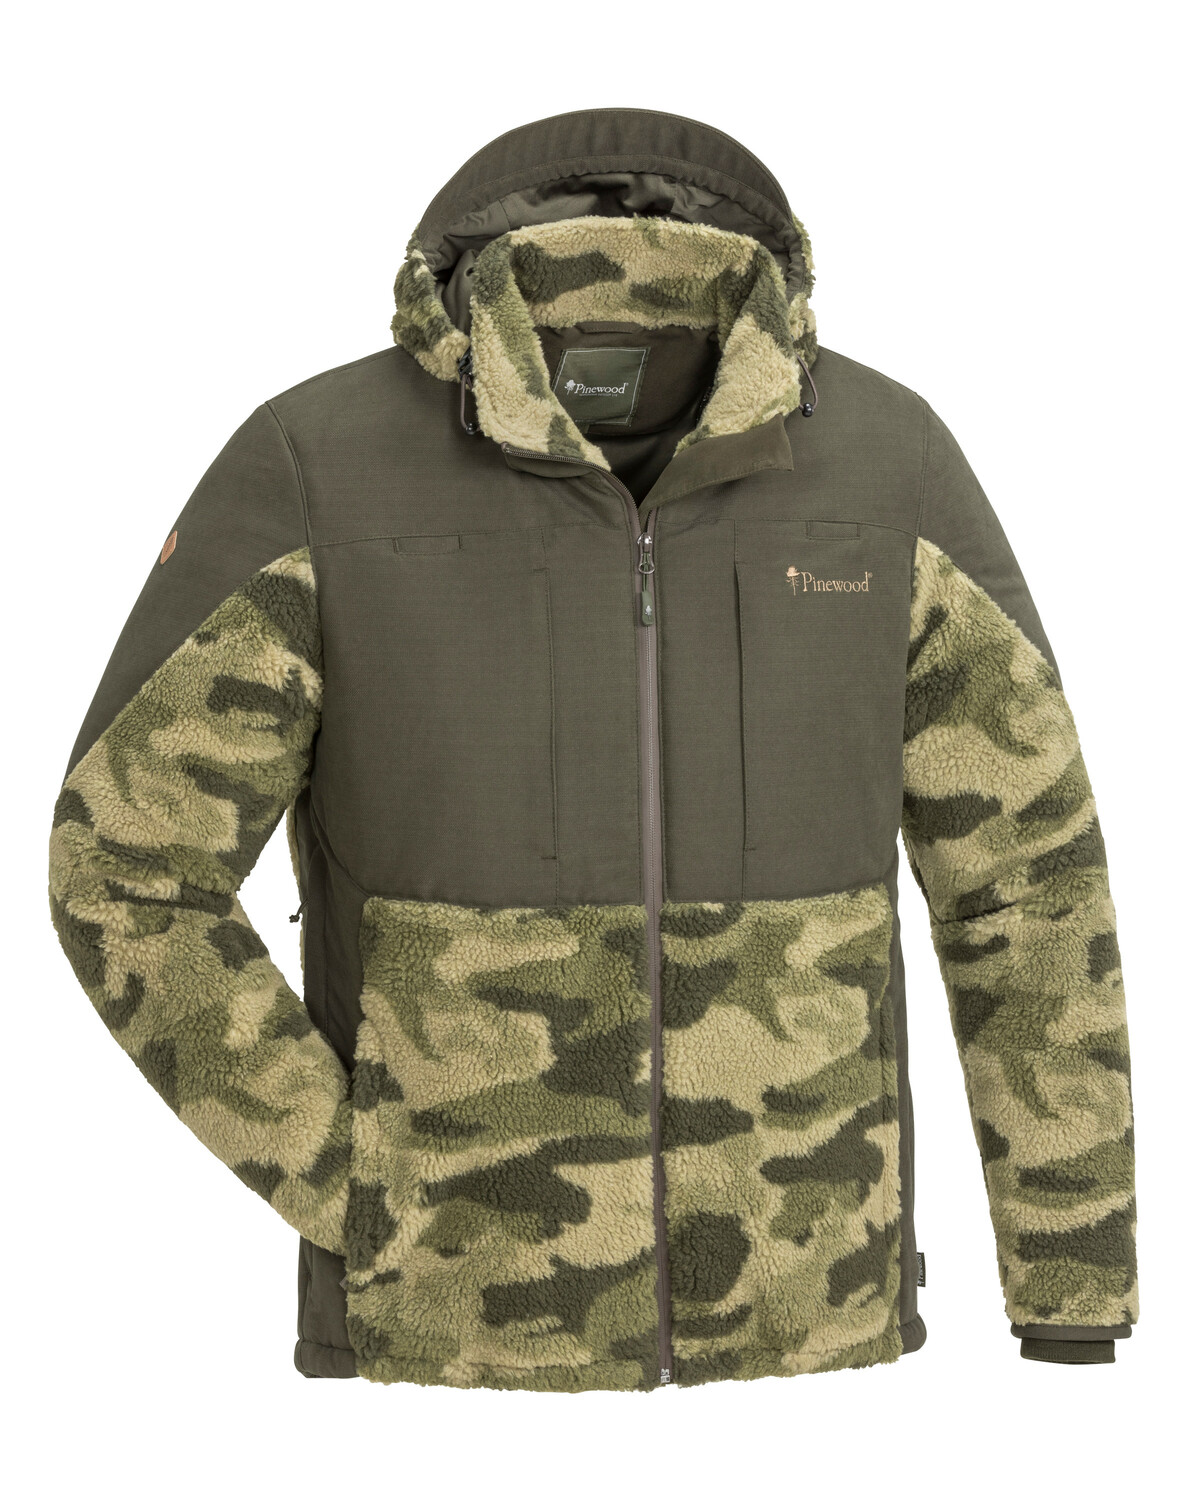 Зимняя охотничья куртка ESBO PILE CAMOU  Pinewood 5603-979